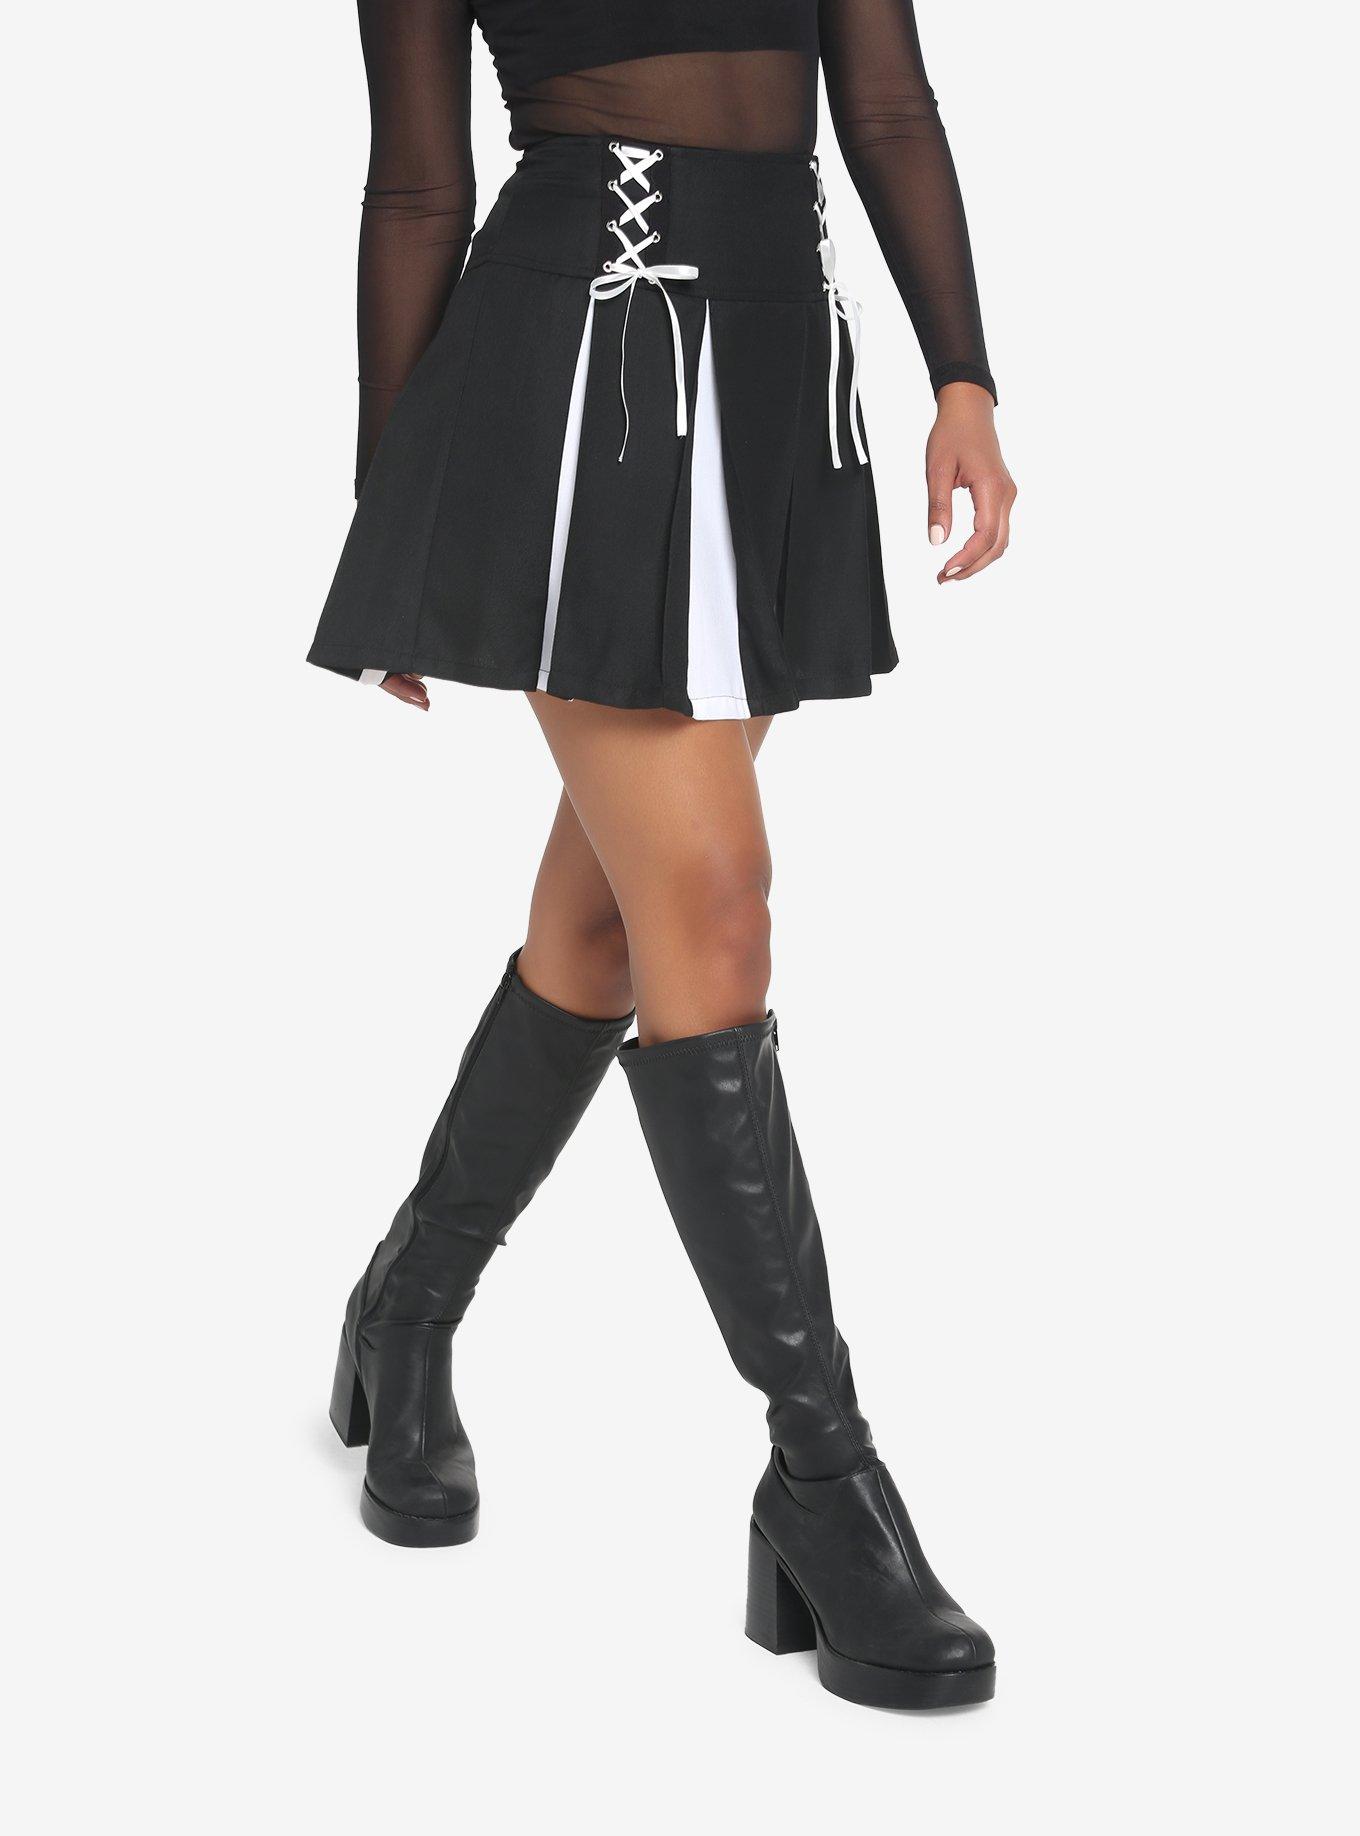 Black & White Contrast Pleated Lace-Up Skirt, BLACK, alternate